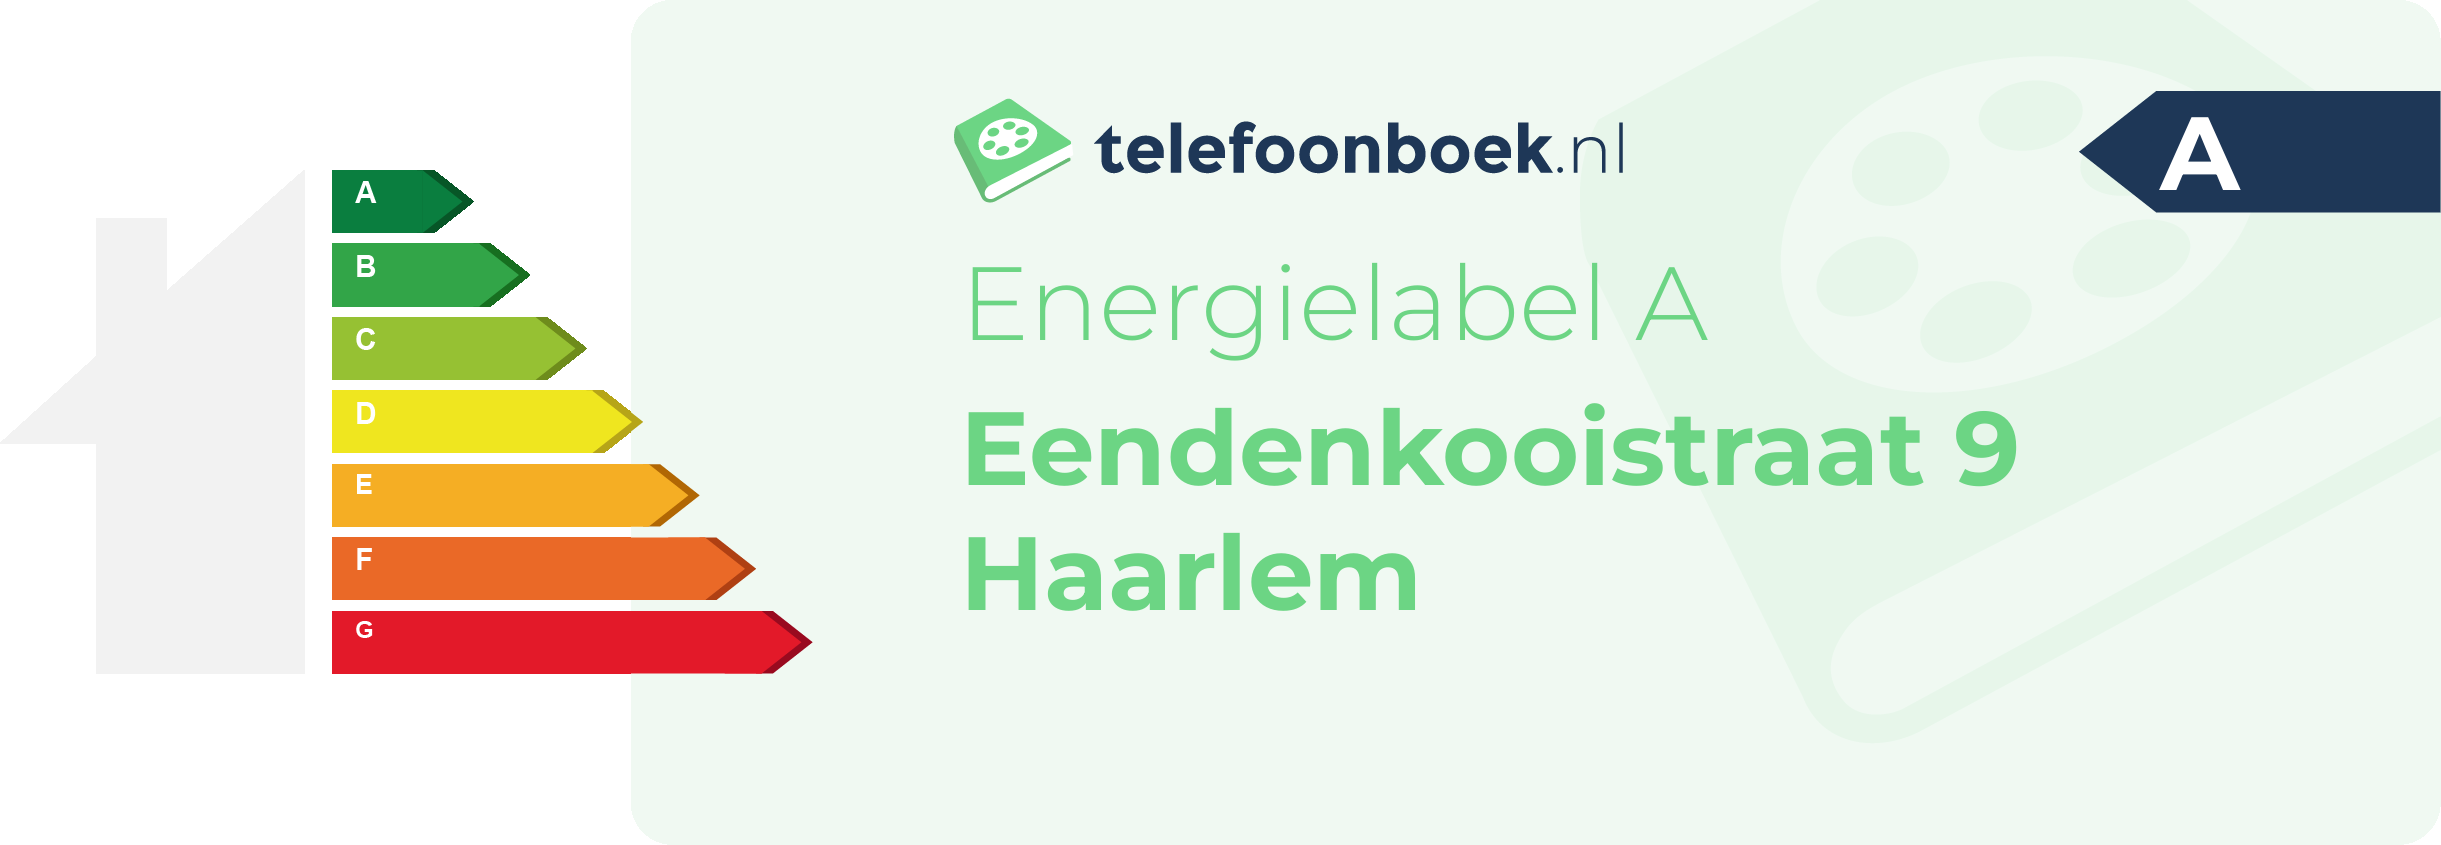 Energielabel Eendenkooistraat 9 Haarlem